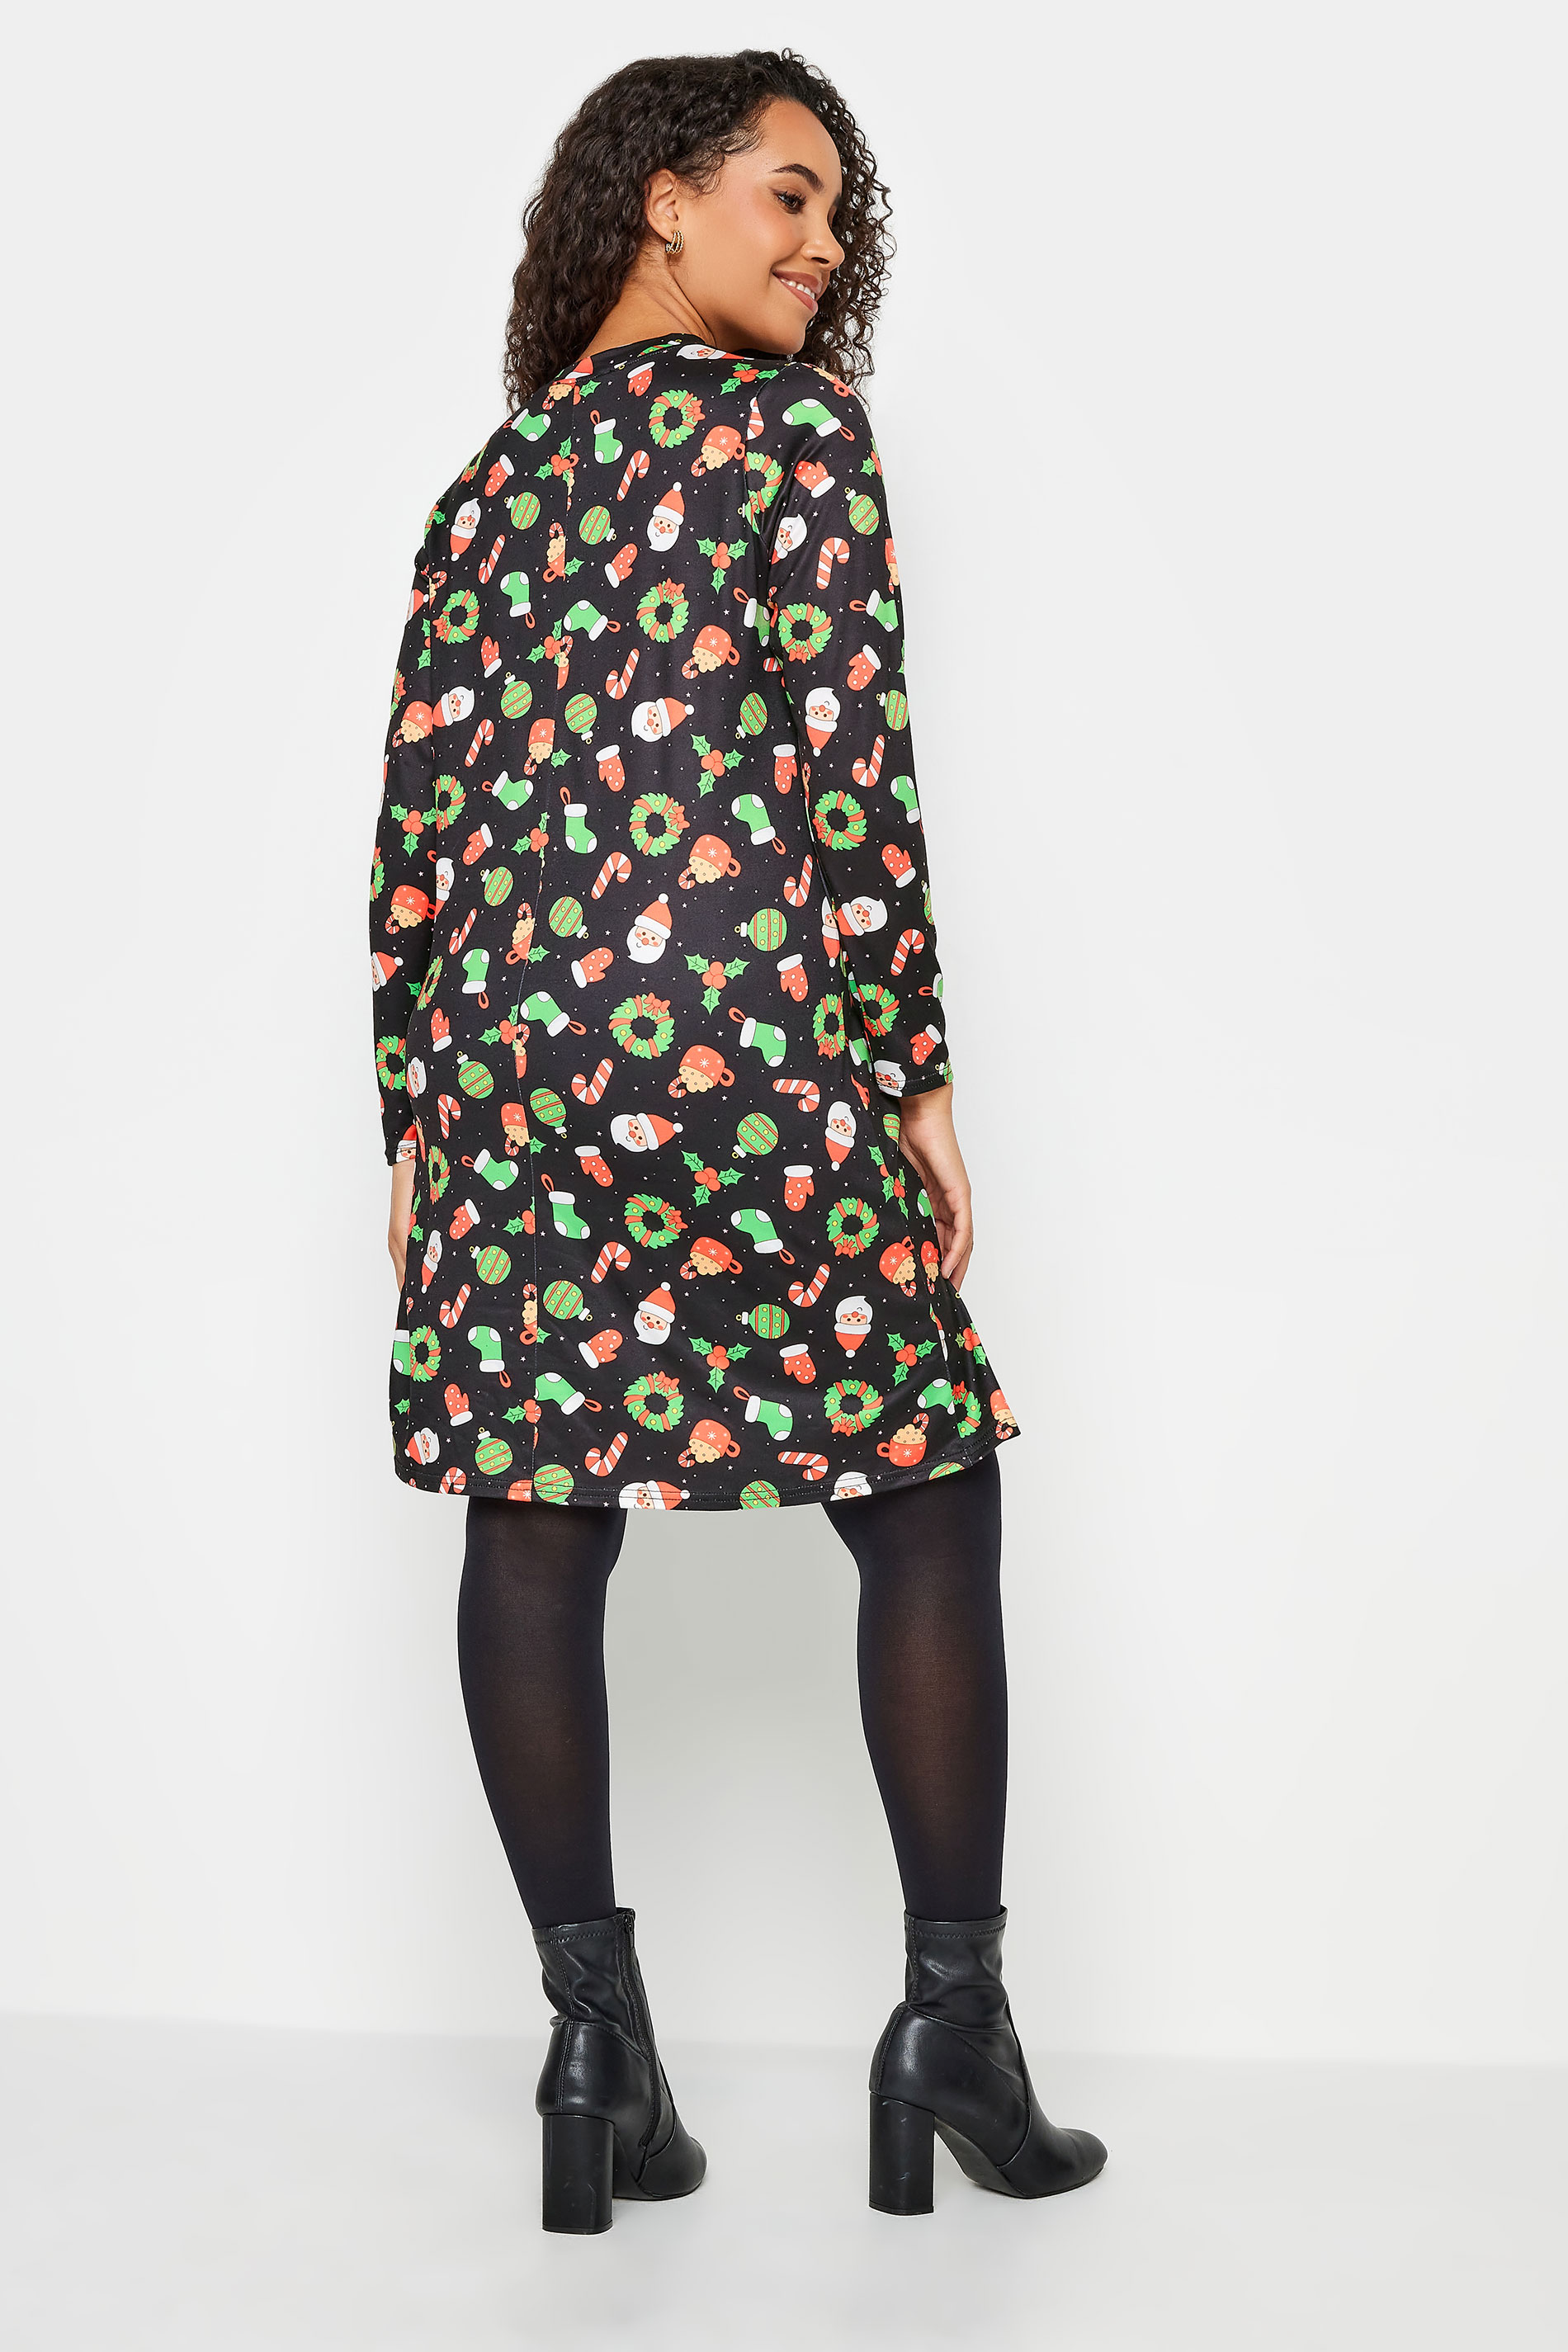 M&Co Black Candy Cane Print Christmas Dress | M&Co 3